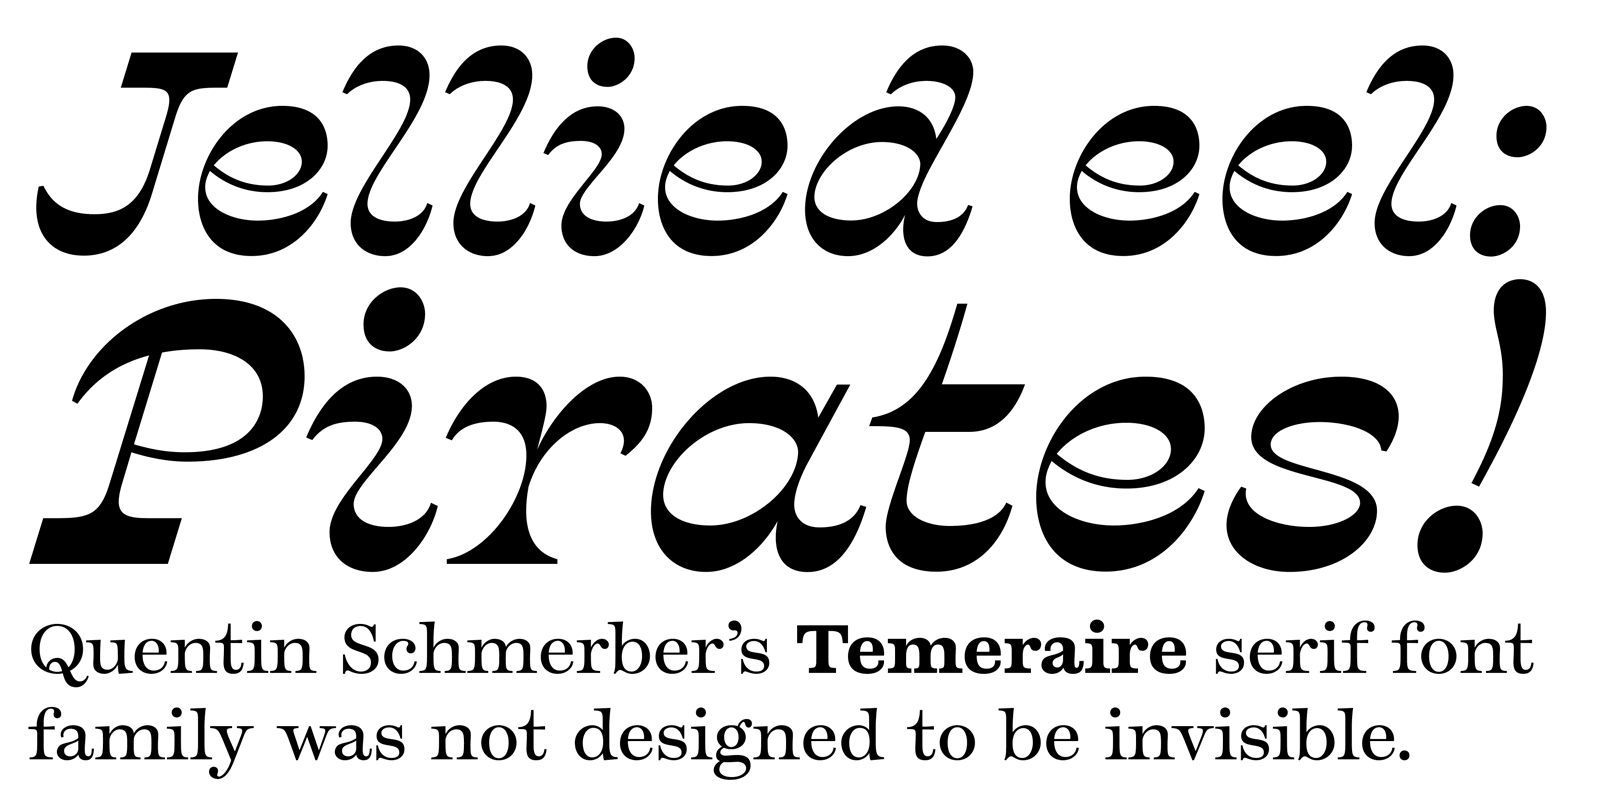 New release: Temeraire